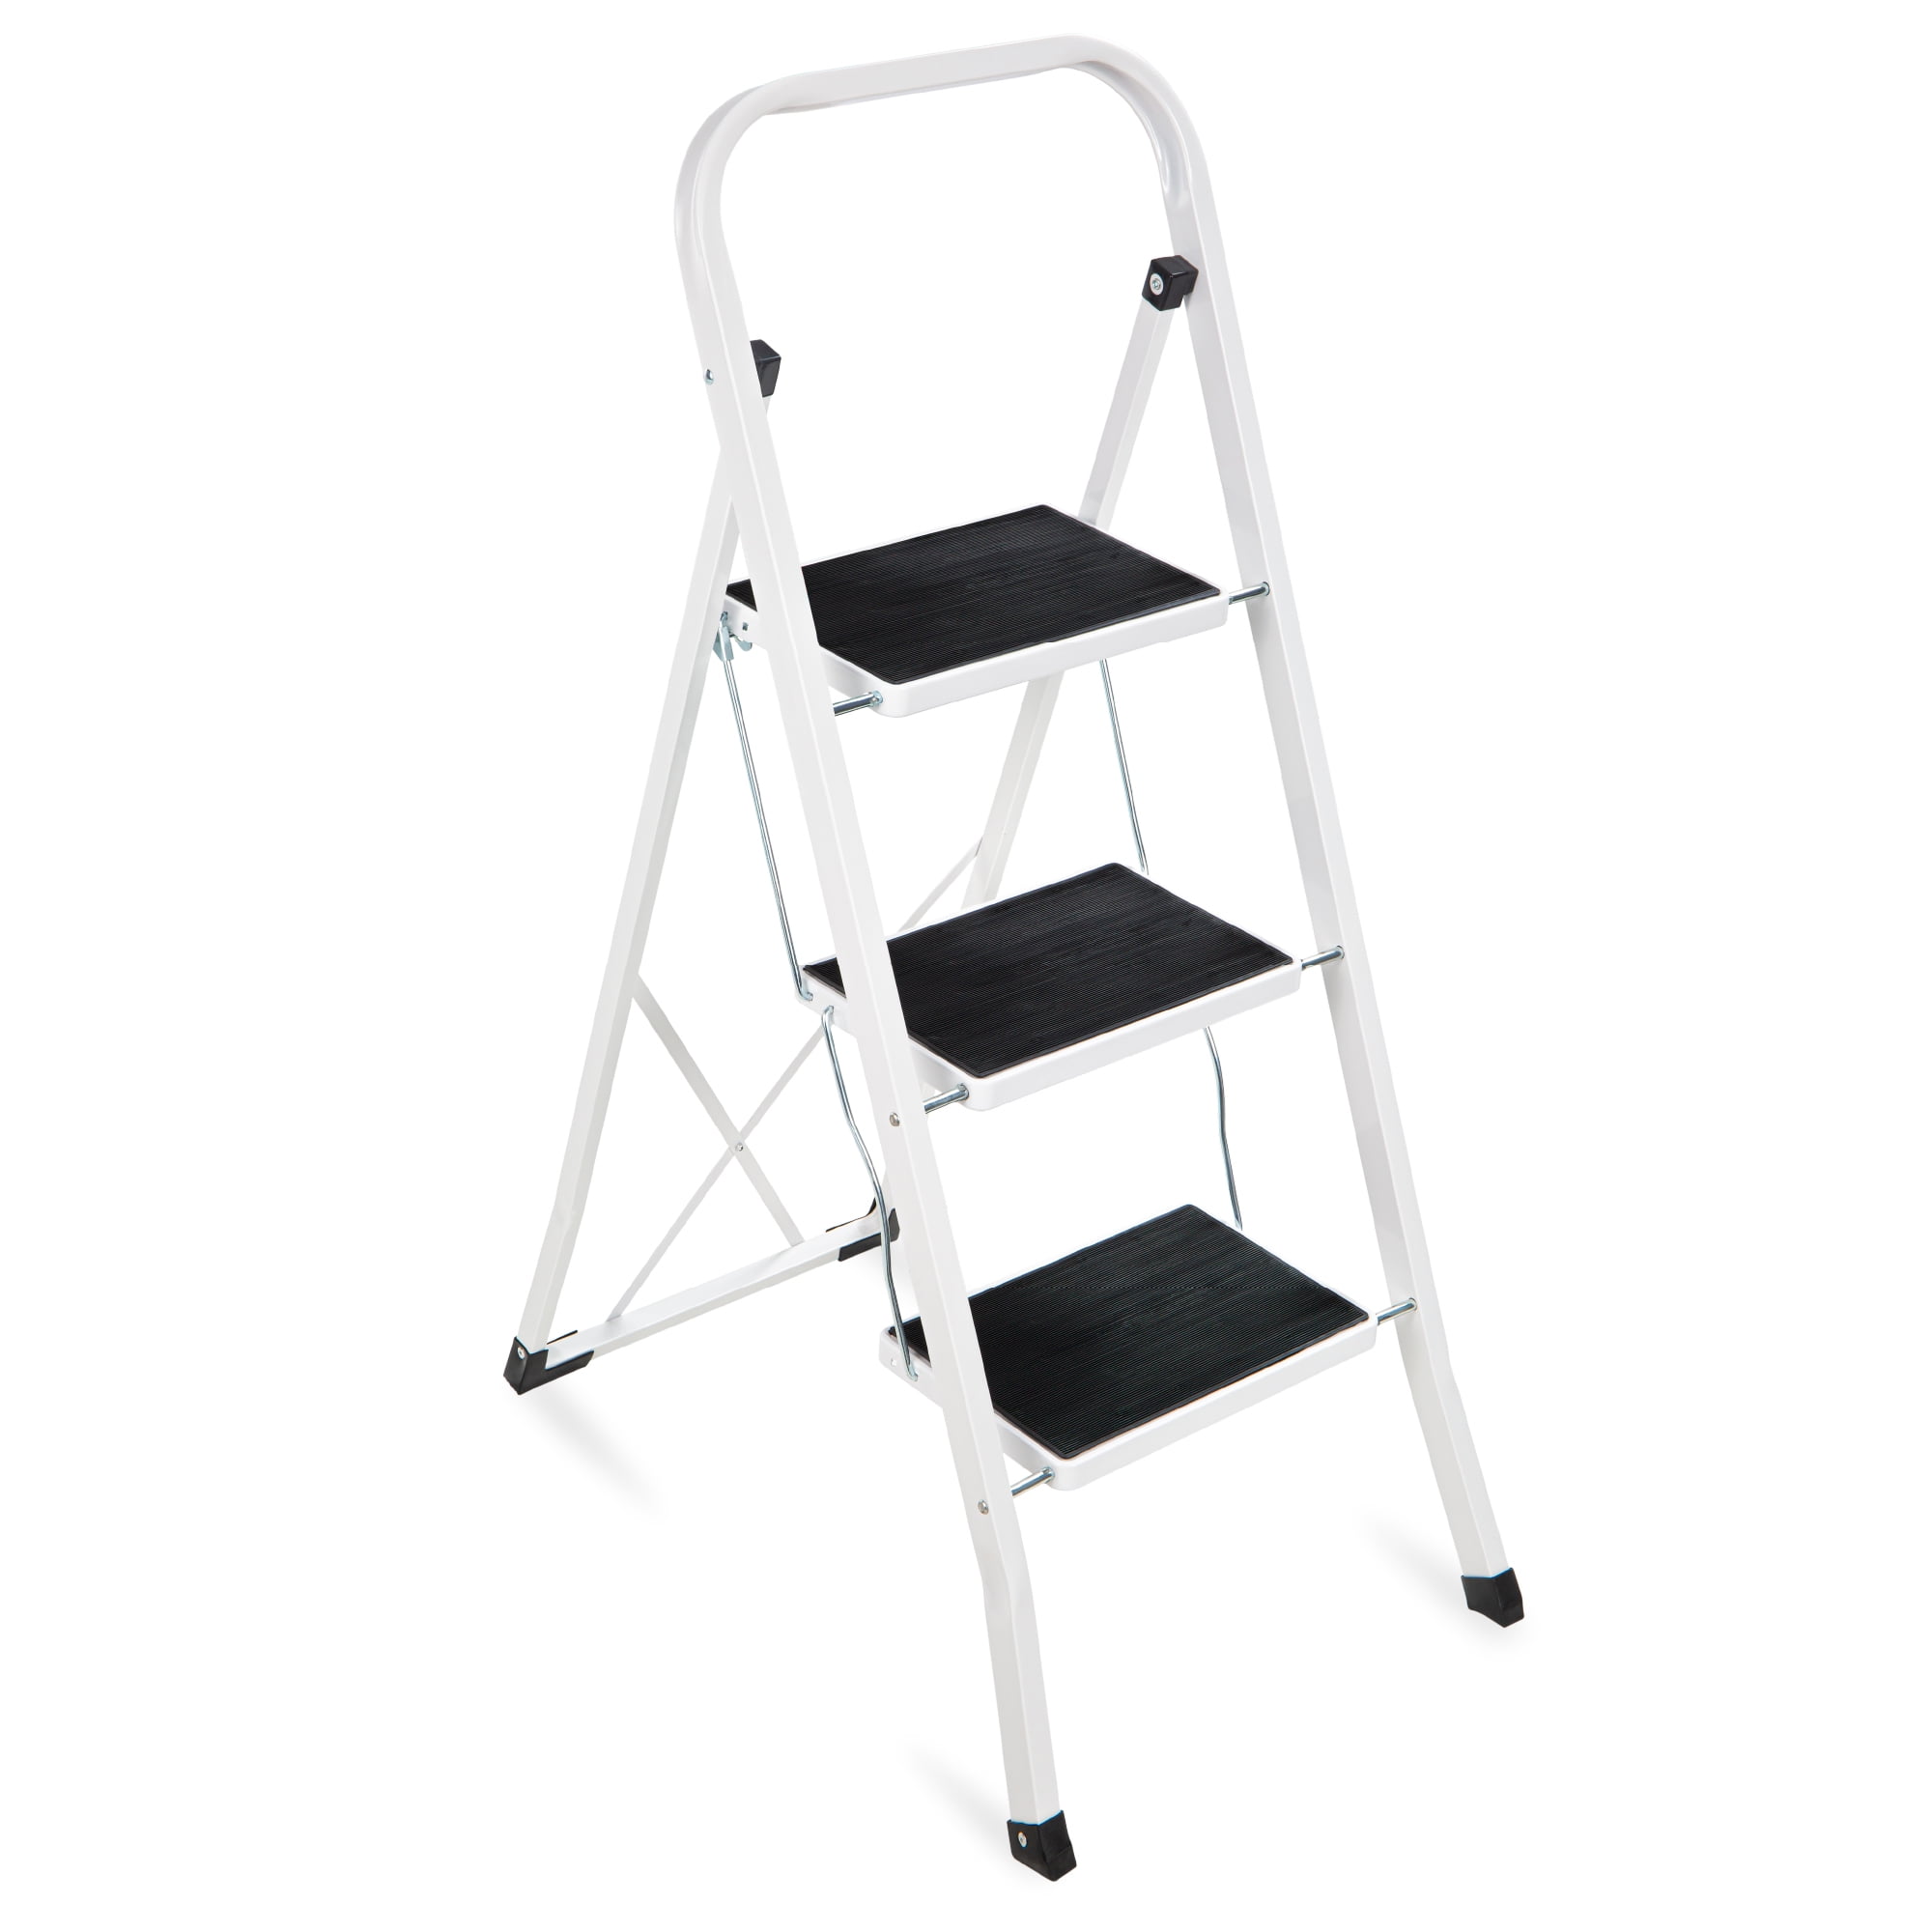 Dporticus Portable Anti-Slip 3 Step Ladder Folding Lightweight Steel Step Stool Platform 330LBS Capacity 